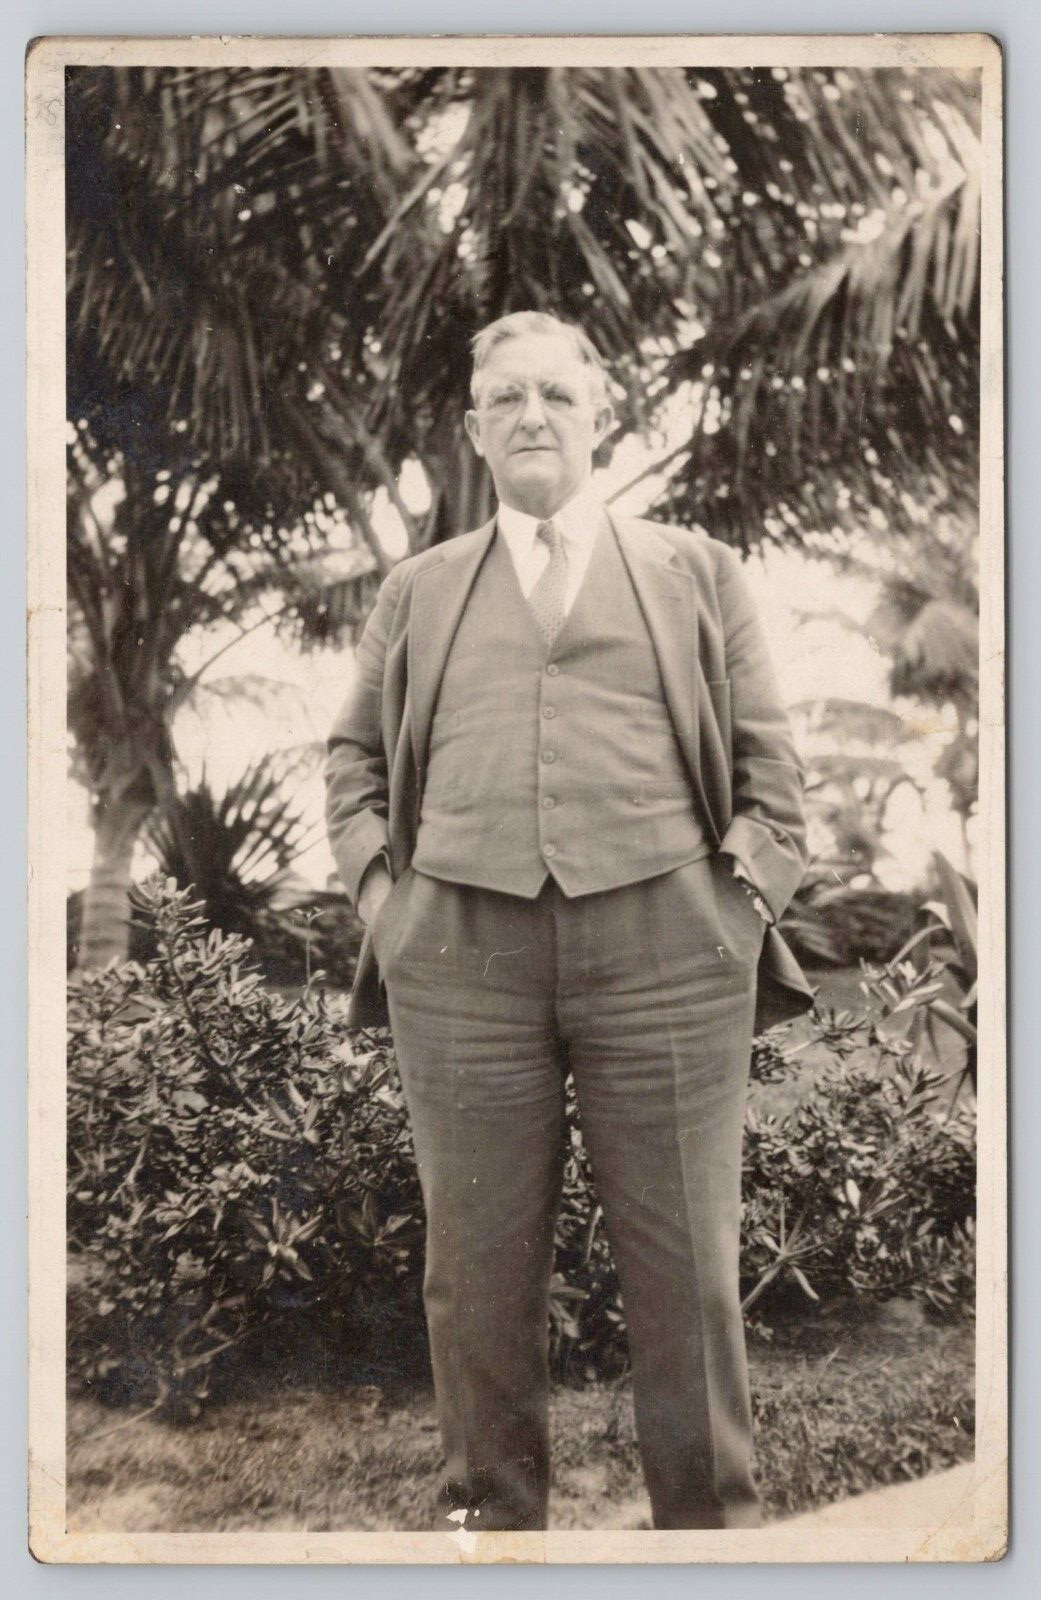 Postcard Vintage RPPC Older Gentleman Suit Tie Hands in Pockets By Palm Trees